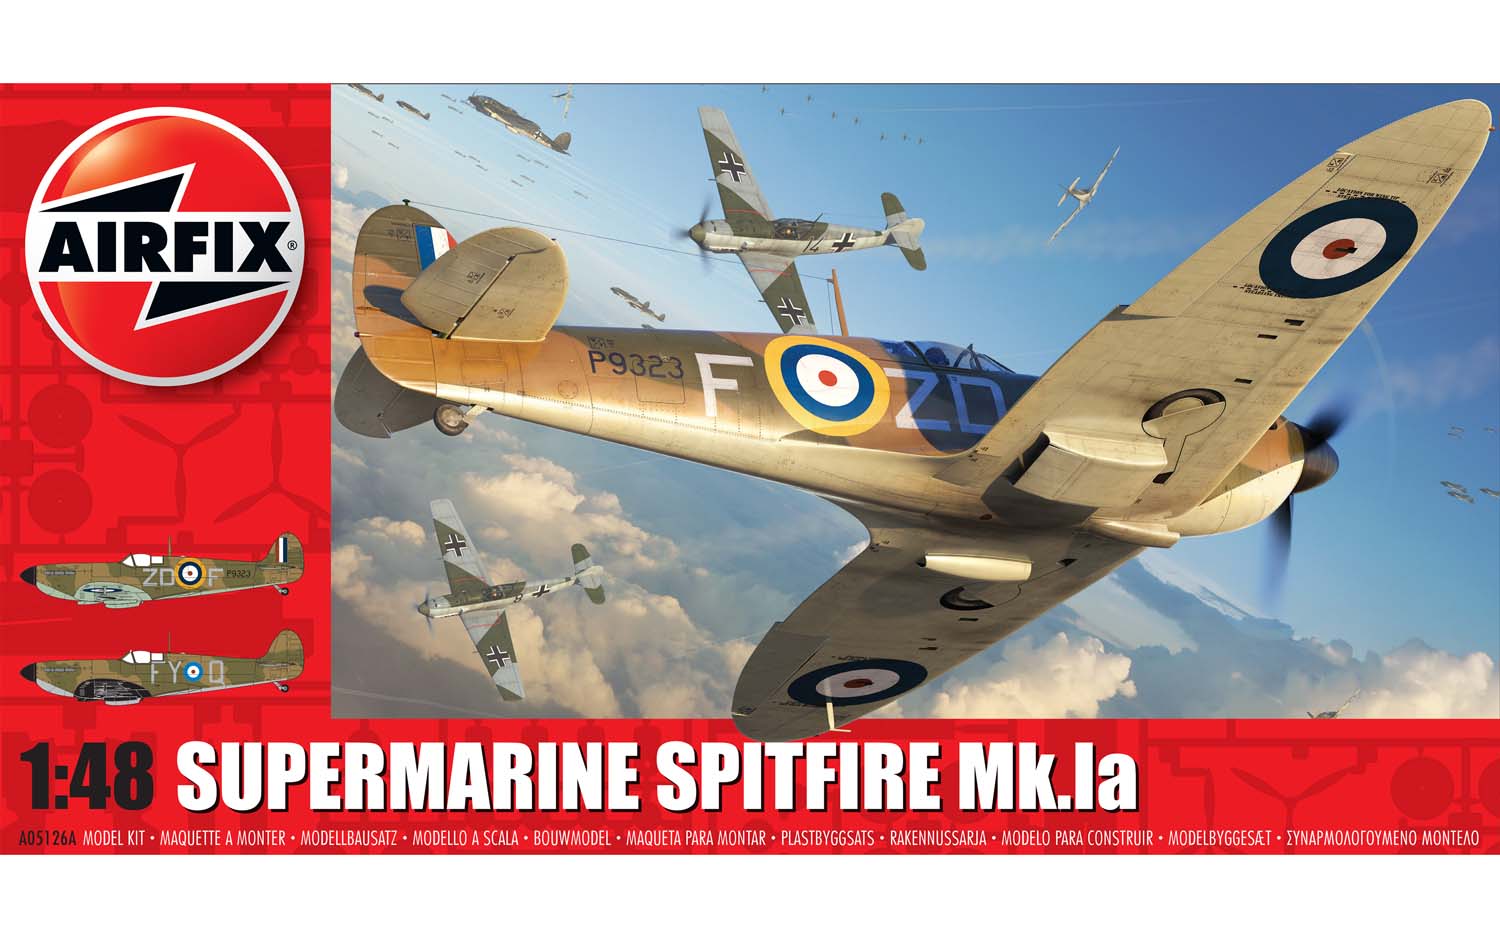 Supermarine Spitfire Mk.1 a